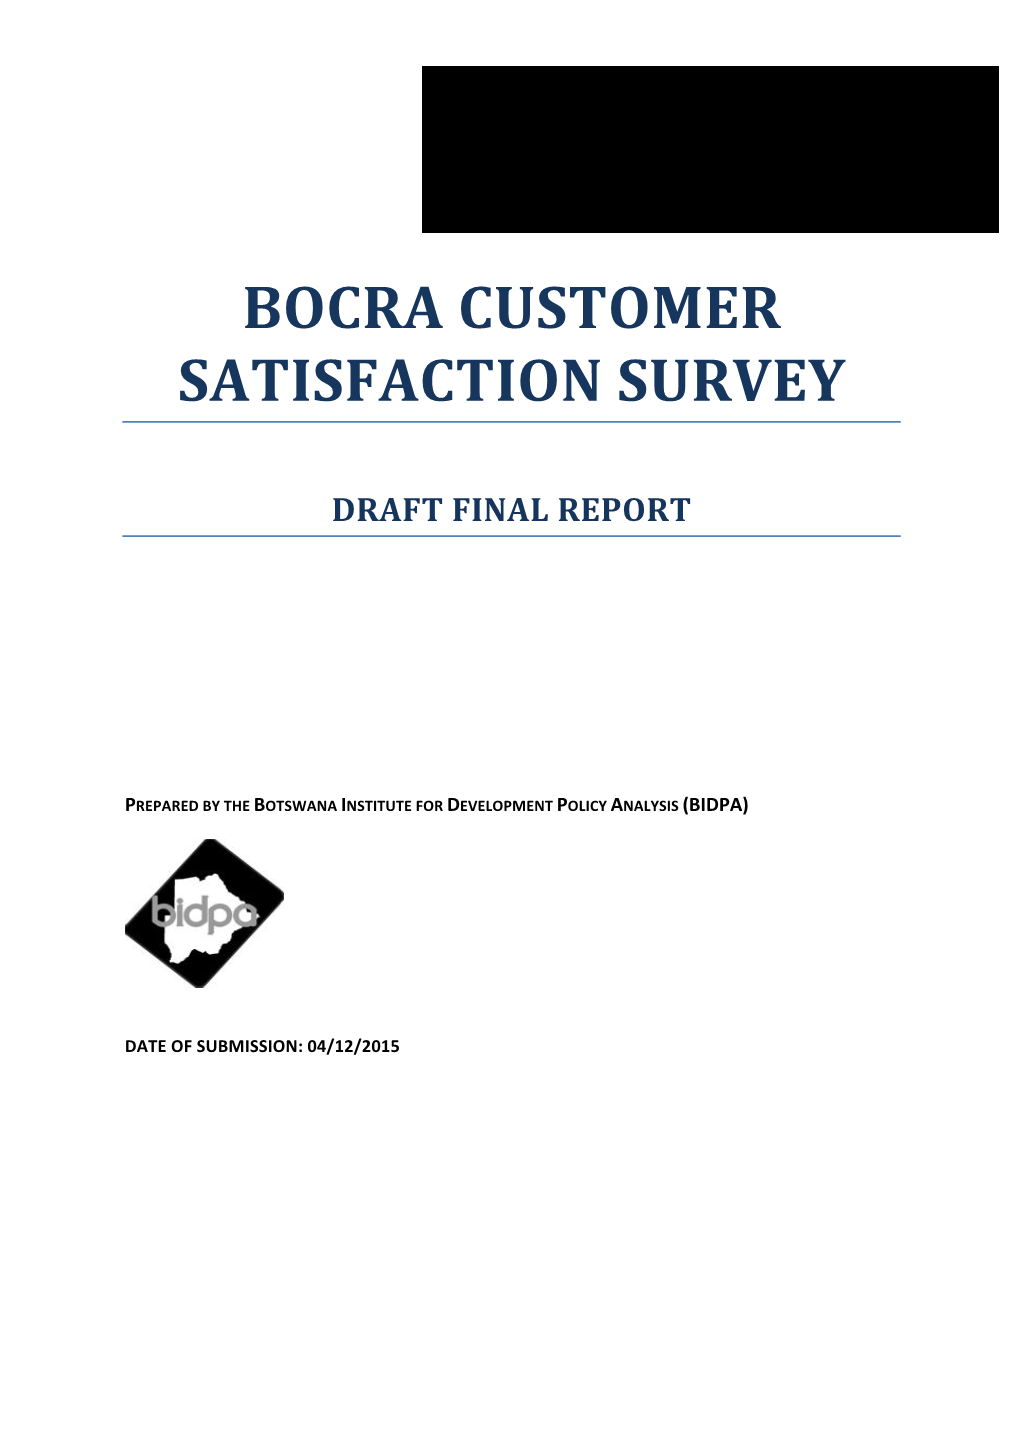 Bocra Customer Satisfaction Survey